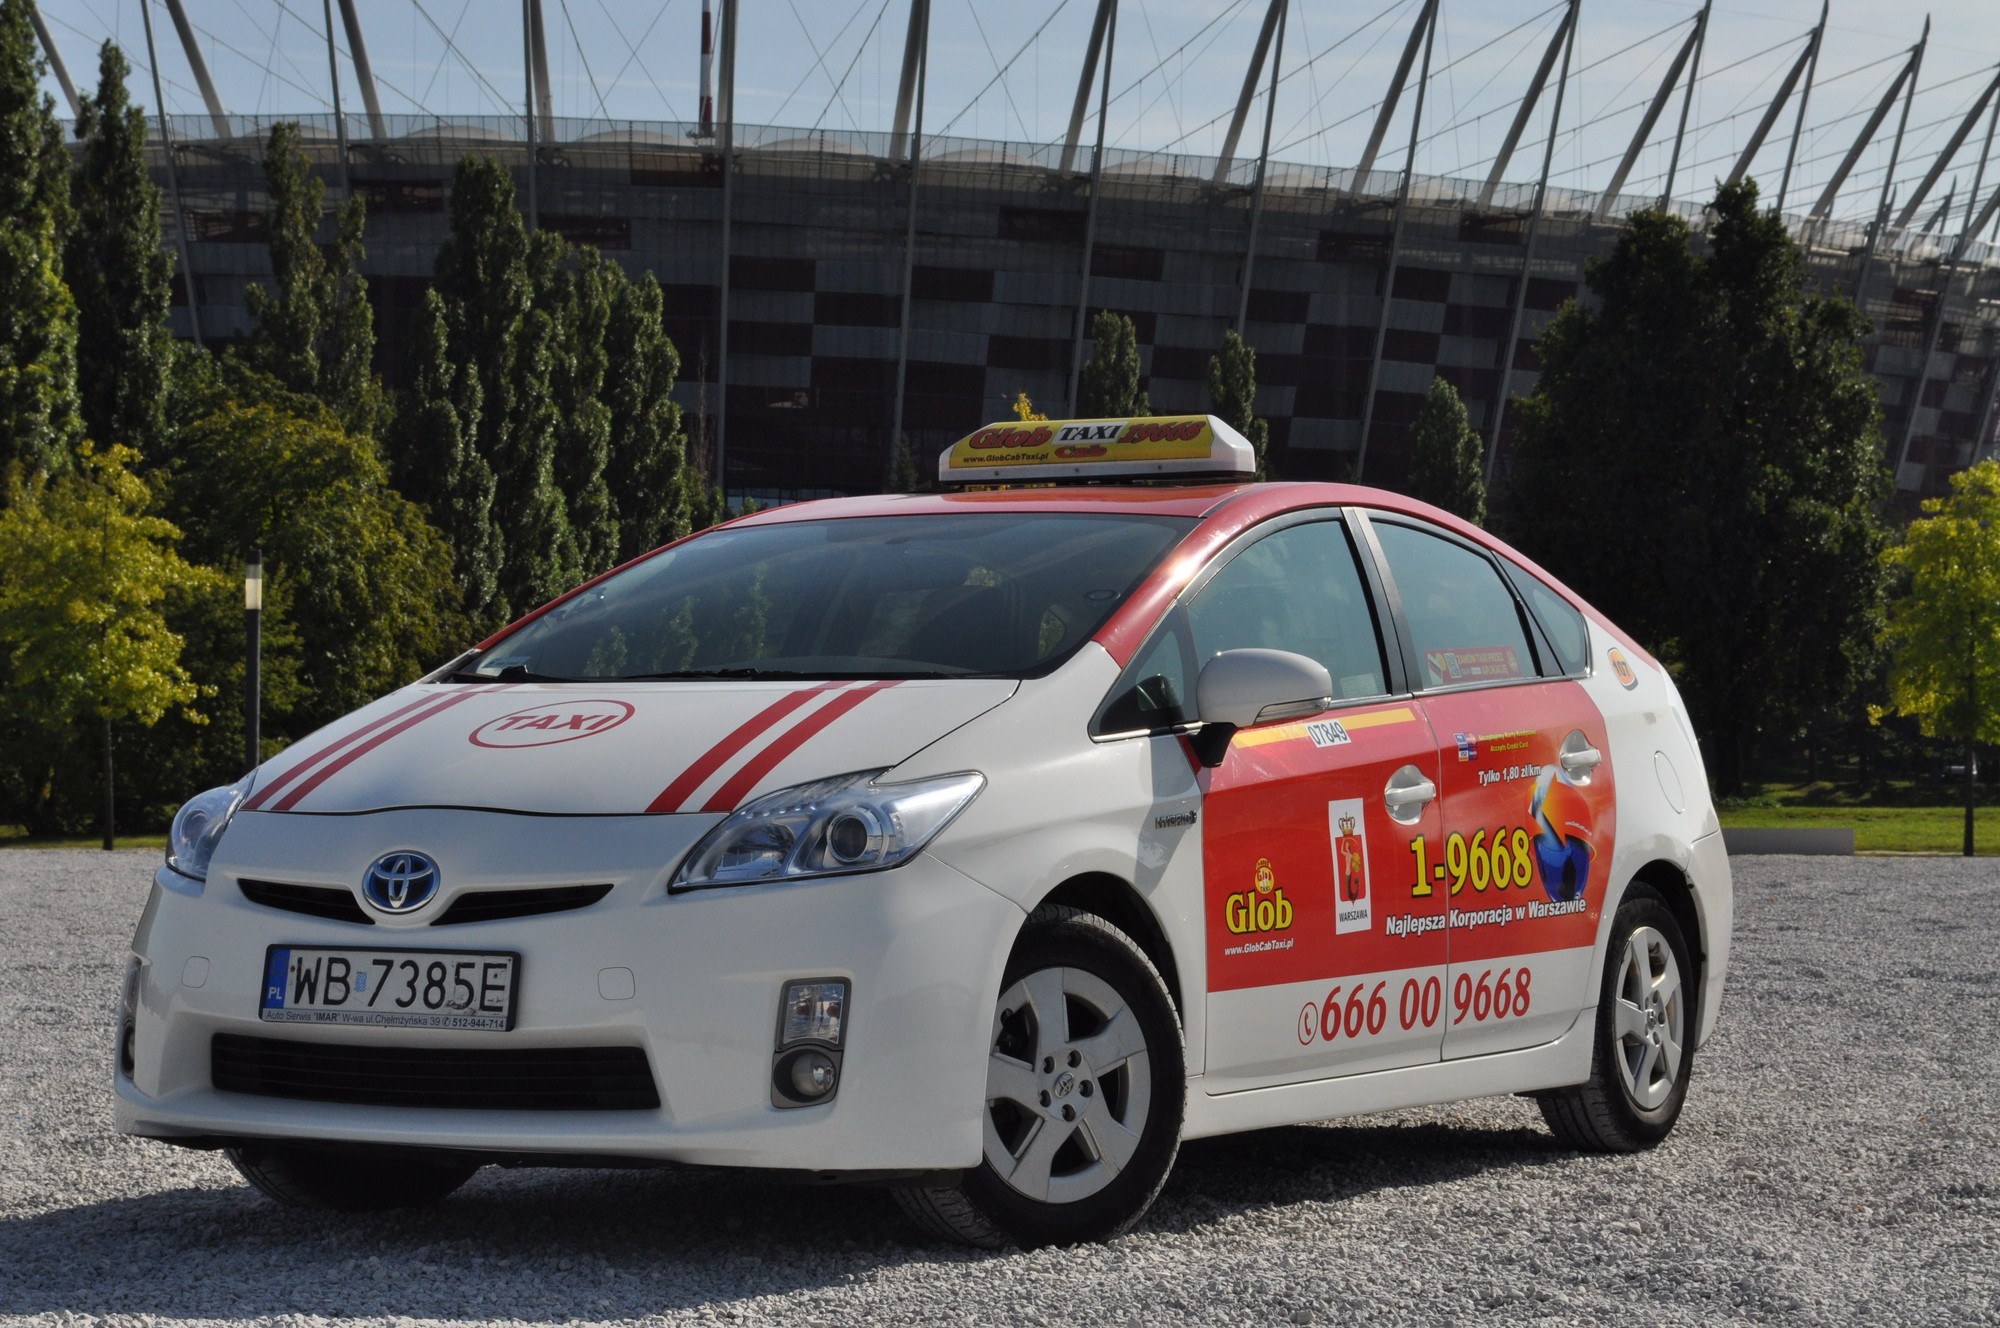 Glob Taxi | Getting Around | Warsaw